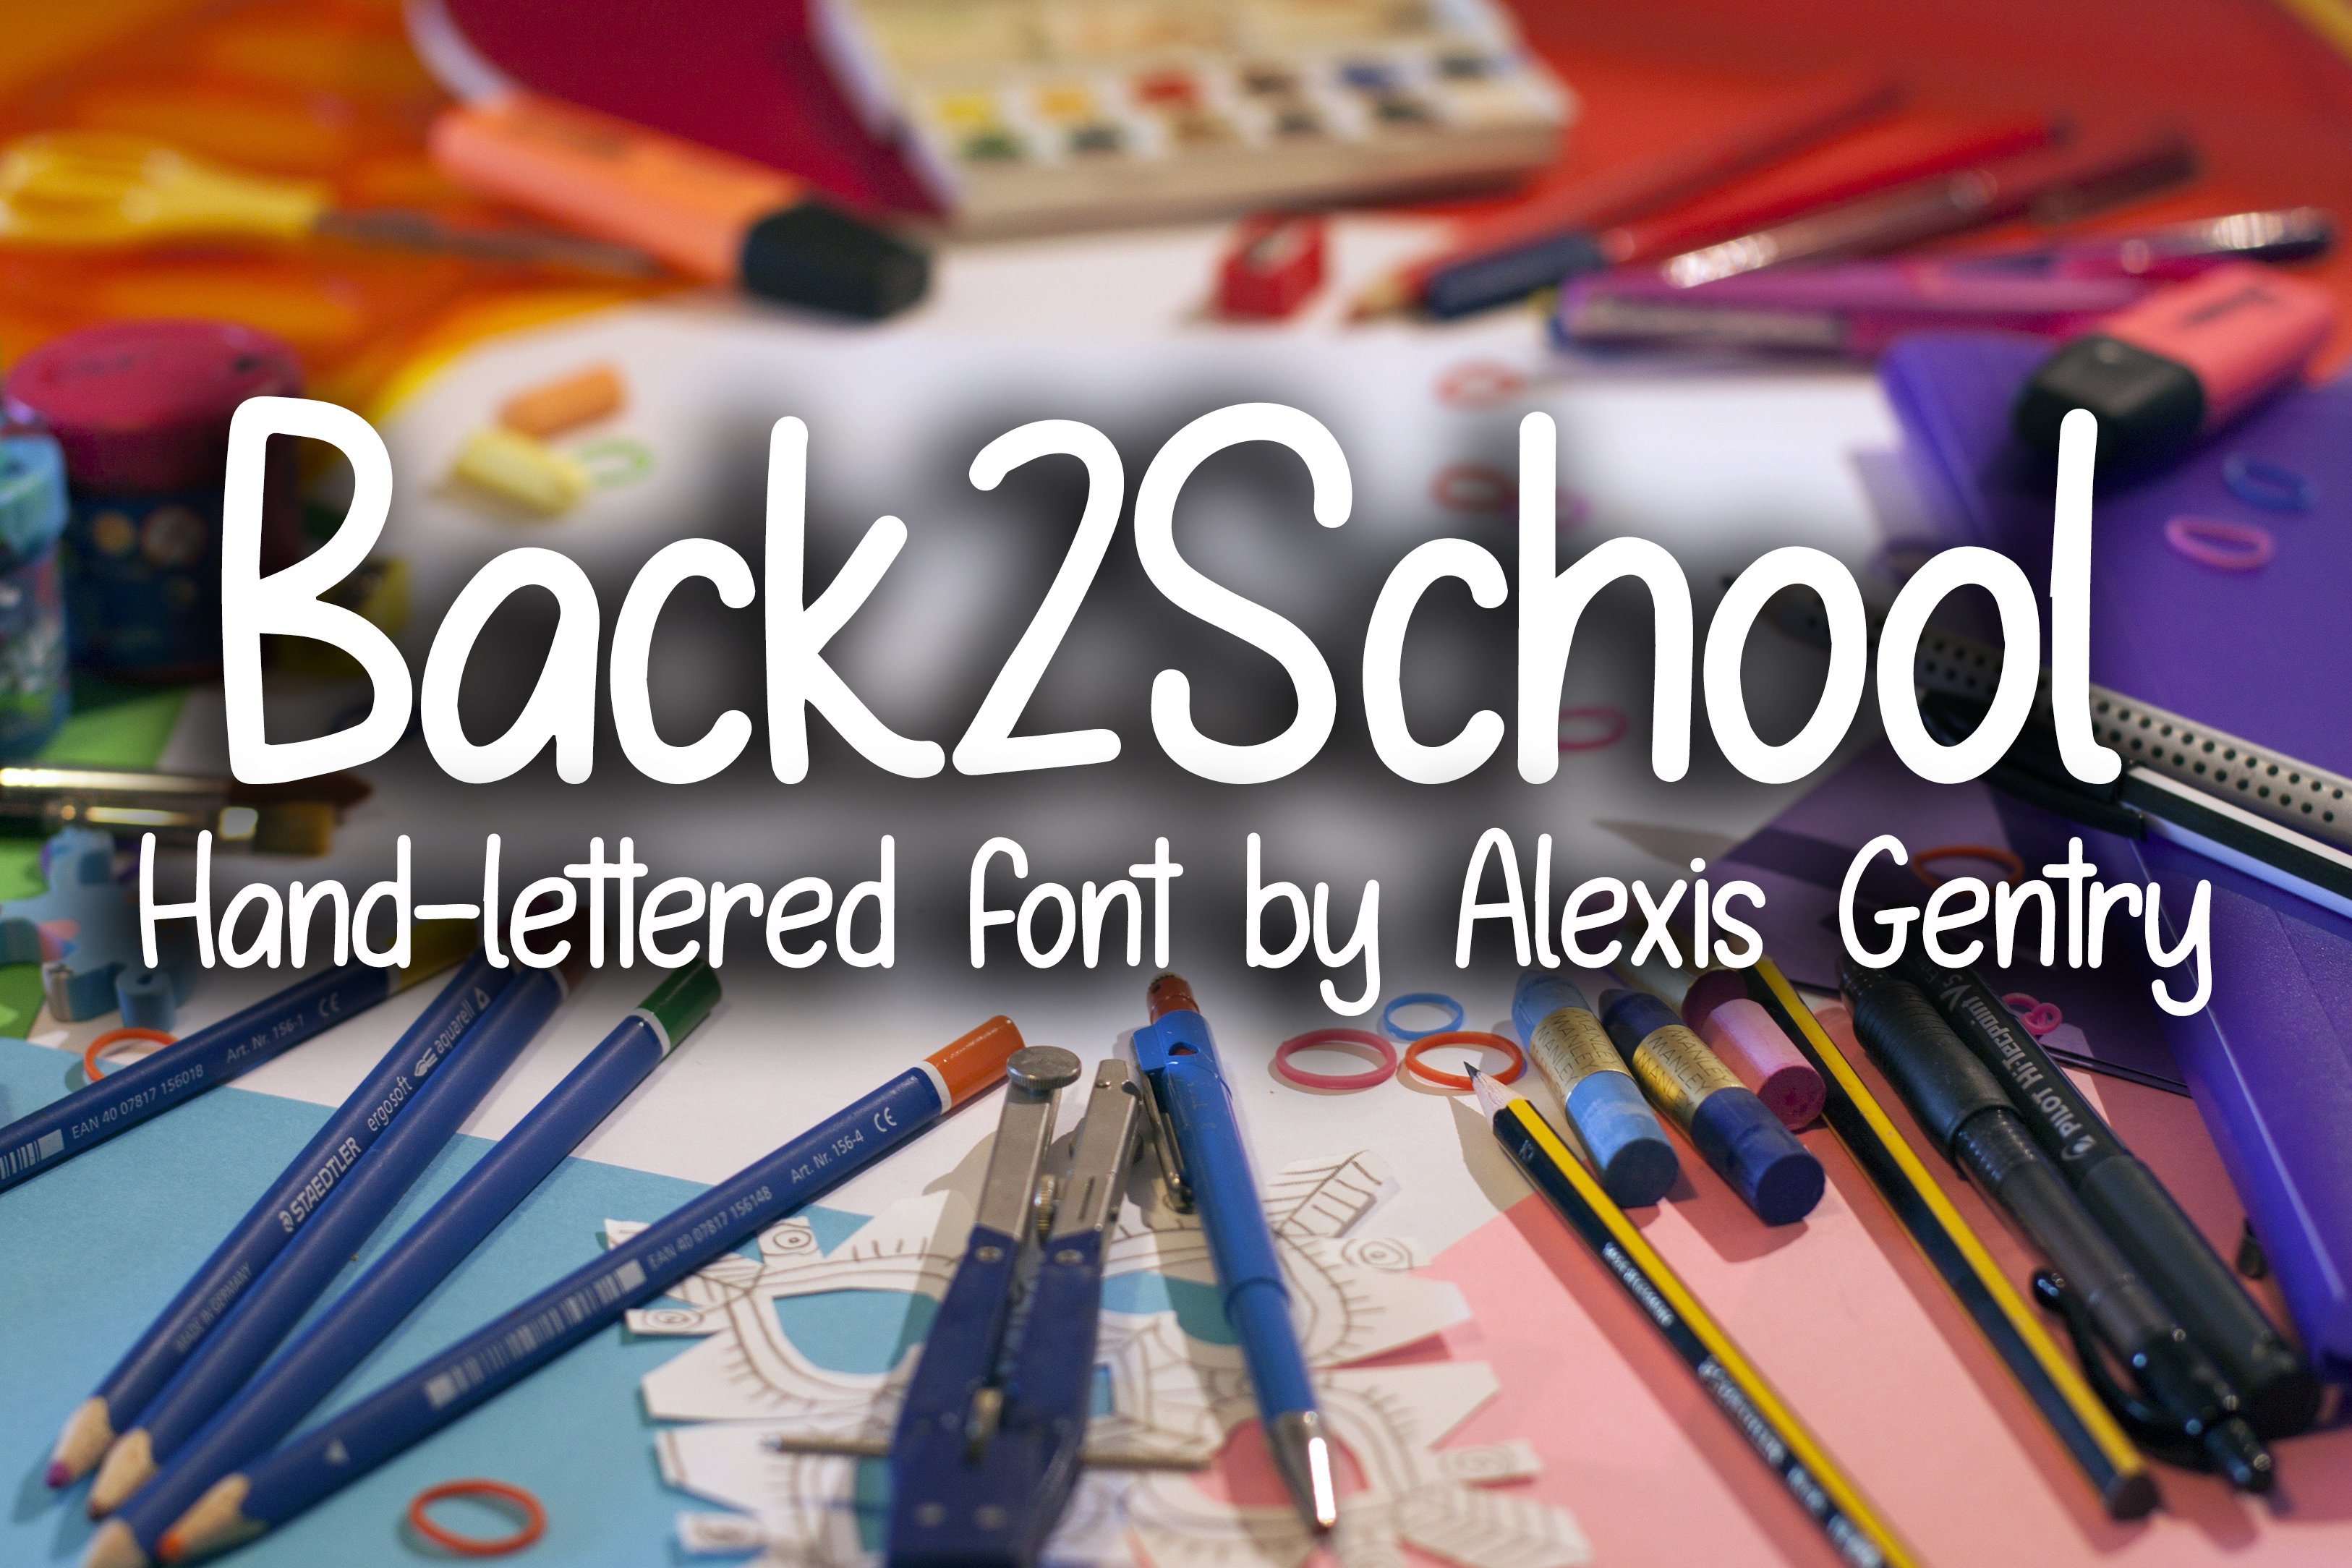 Back2School hand-lettered font cover image.